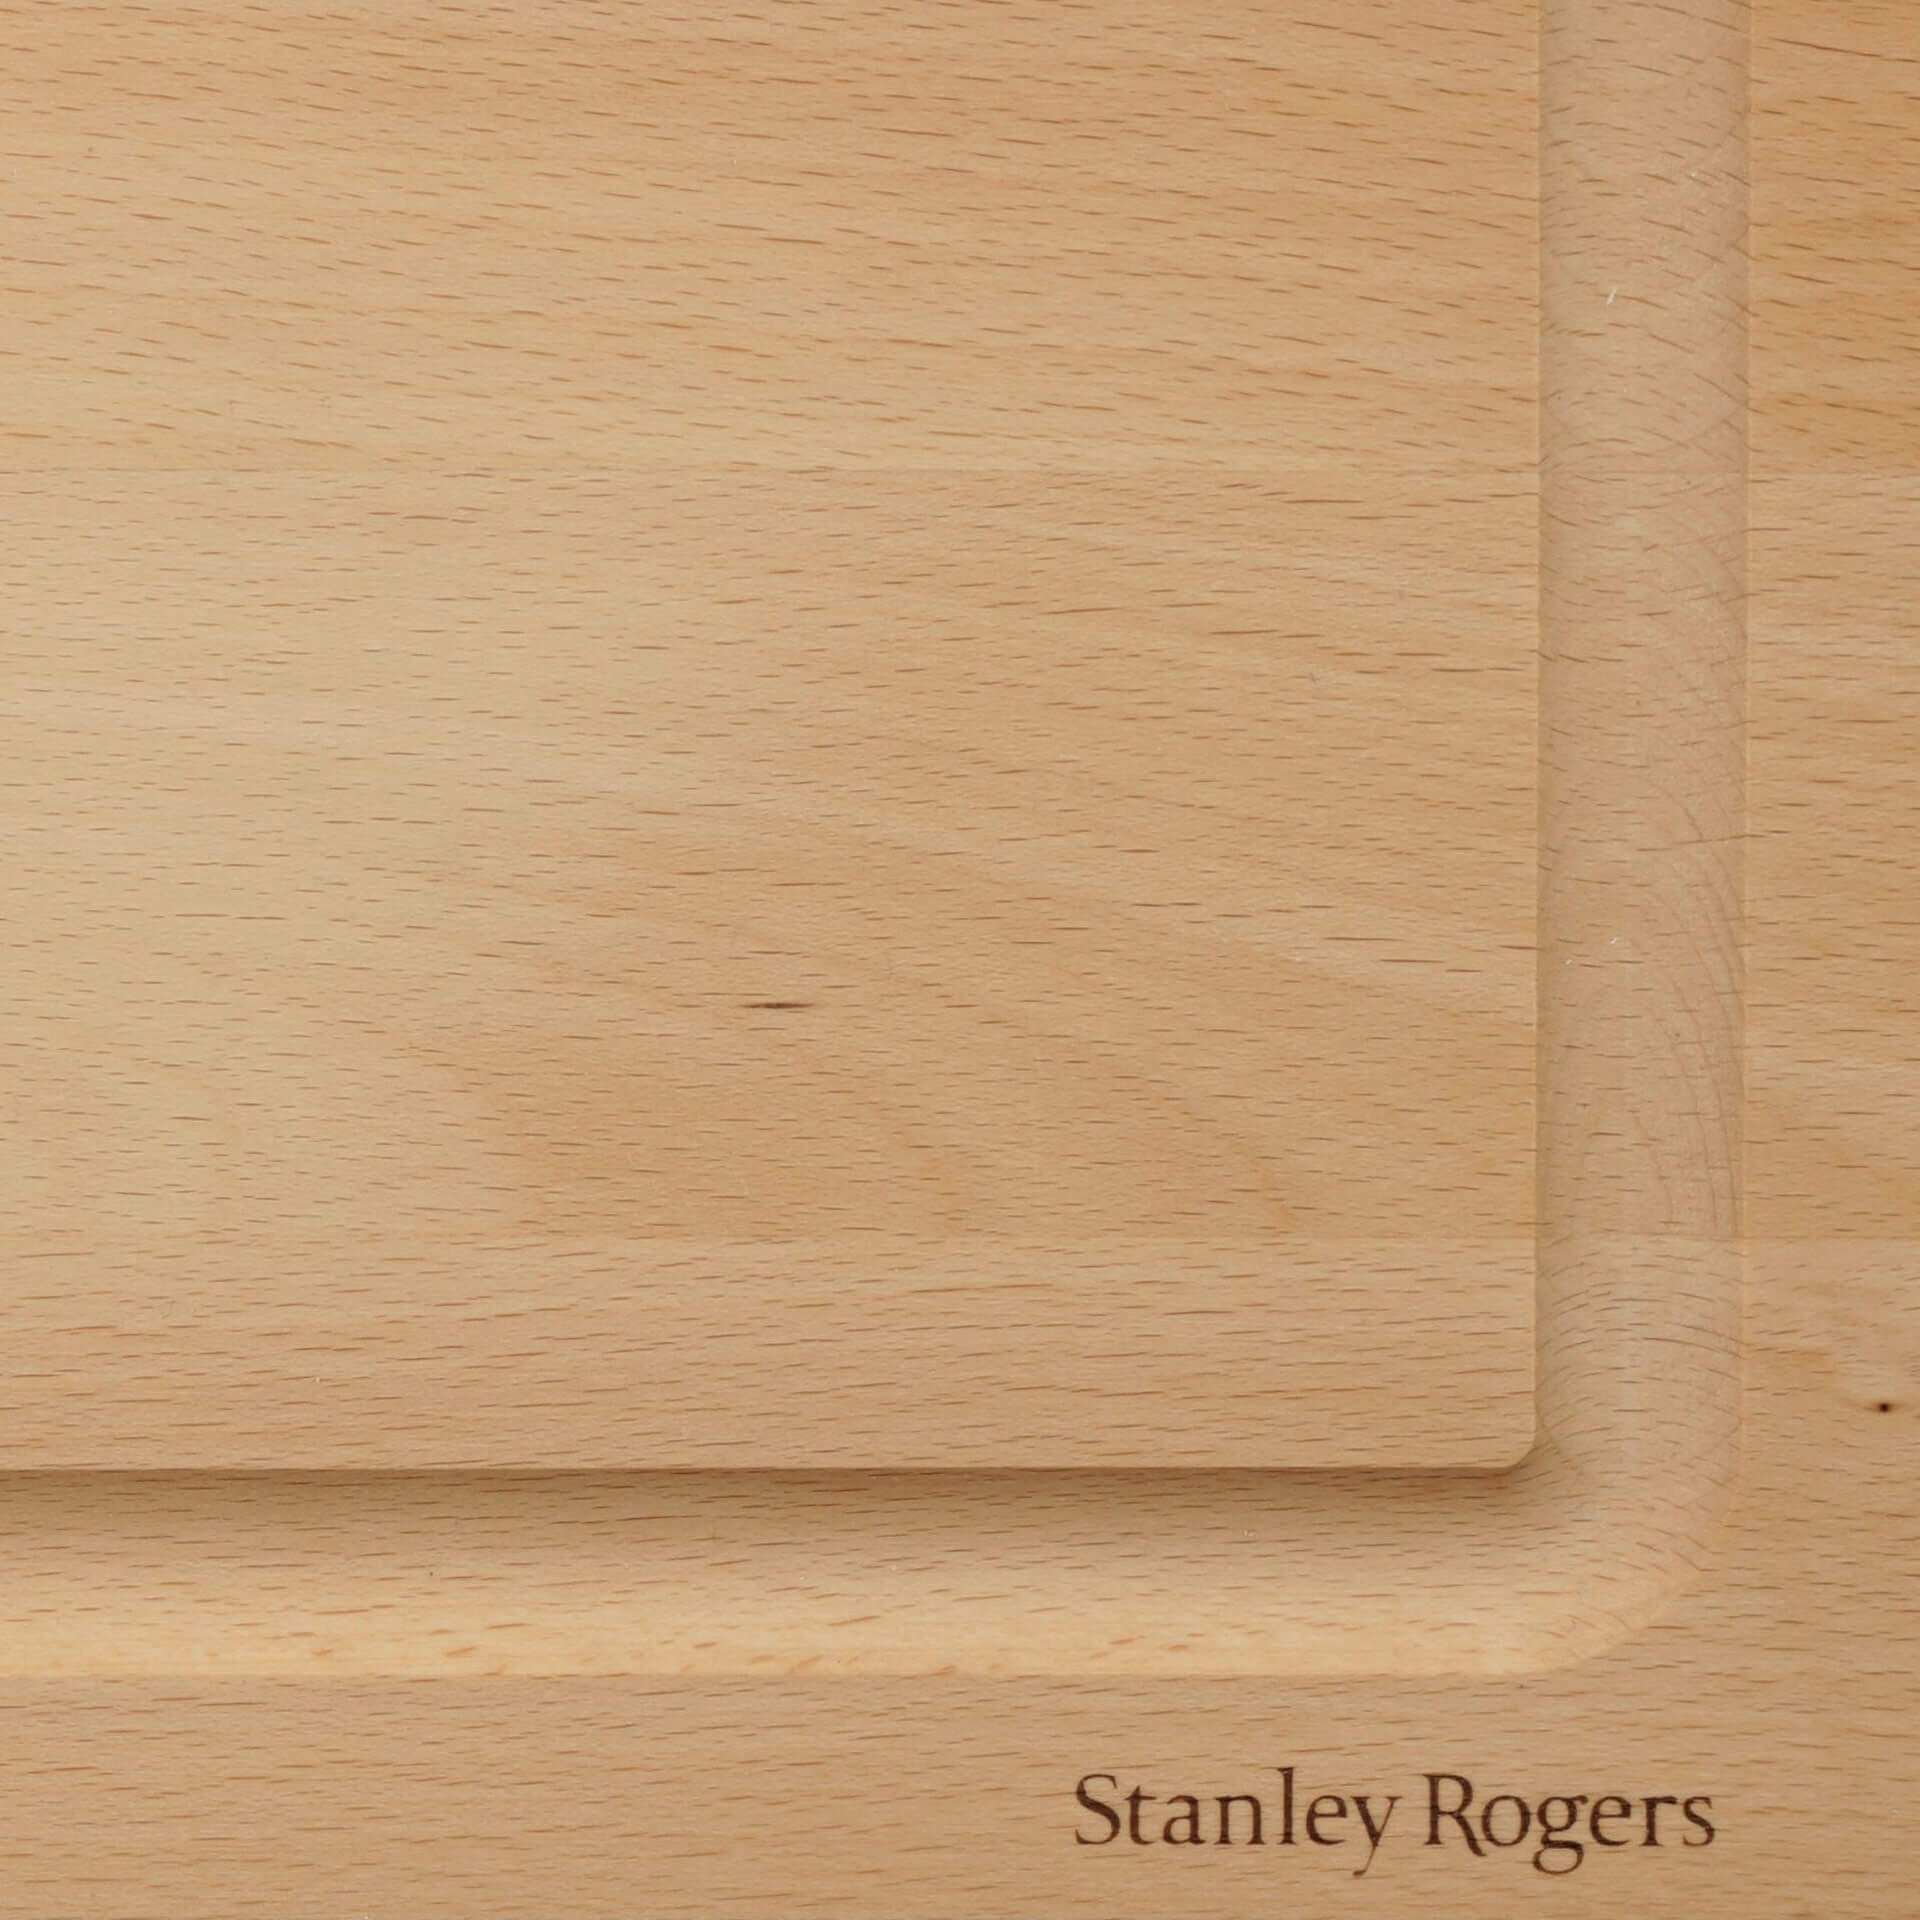 Stanley Rogers Cutting Board, Beech Wood 45cmx20xm